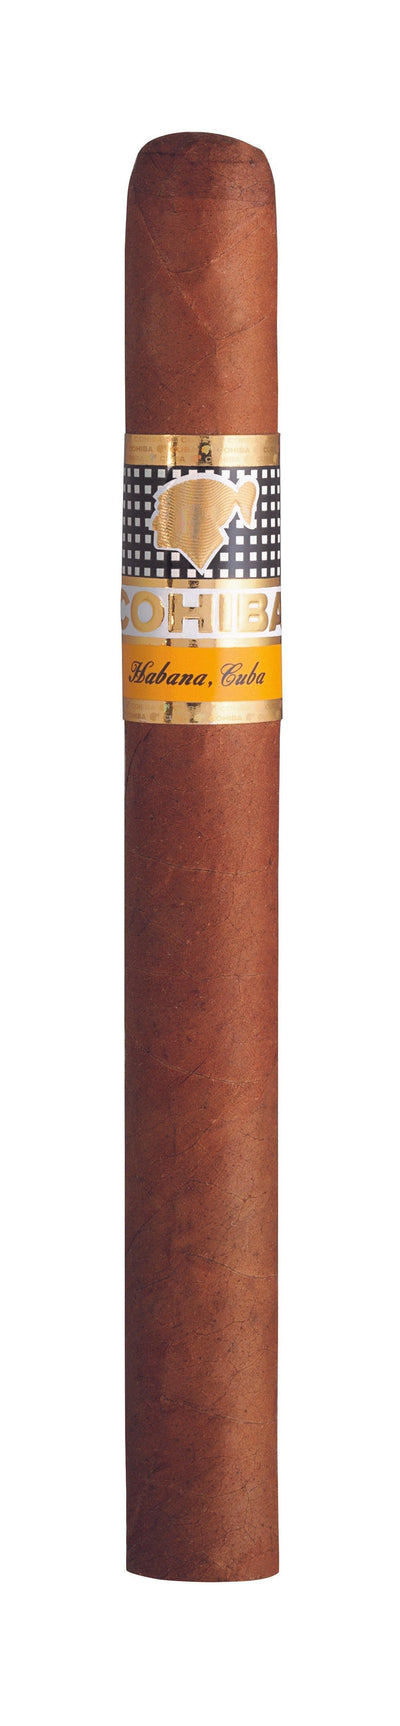 Cohiba Exquisitos - LA GALANA - LA GALANA - Zigarre - Zigarren - Zigarren kaufen - Zigarrendreherin | Zigarrendreher | Zigarrenmanufaktur | Tabakgeschäft